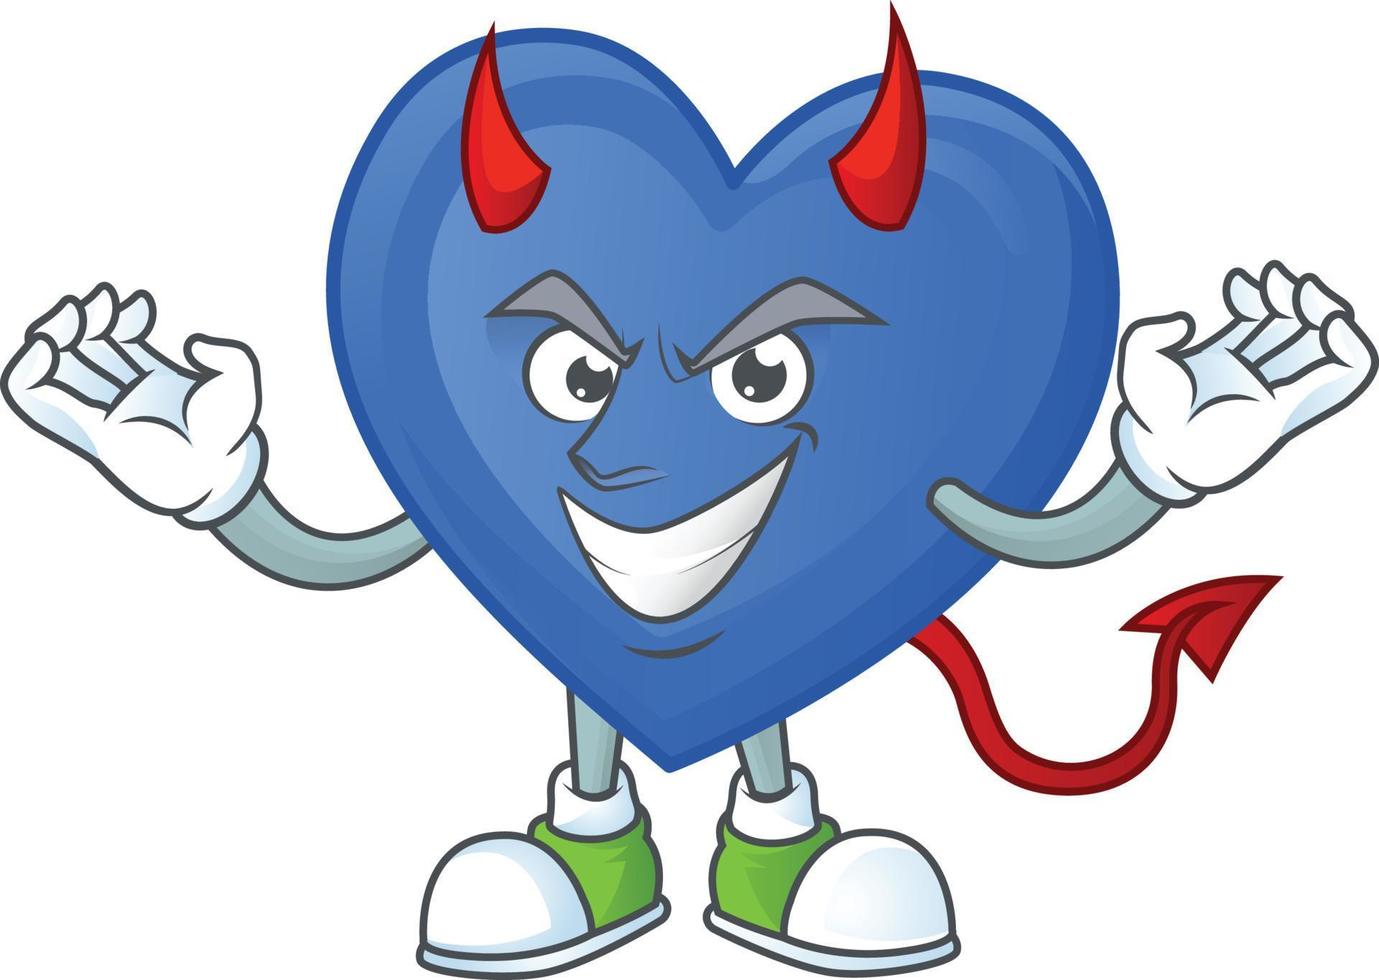 Blue love cartoon character style vector